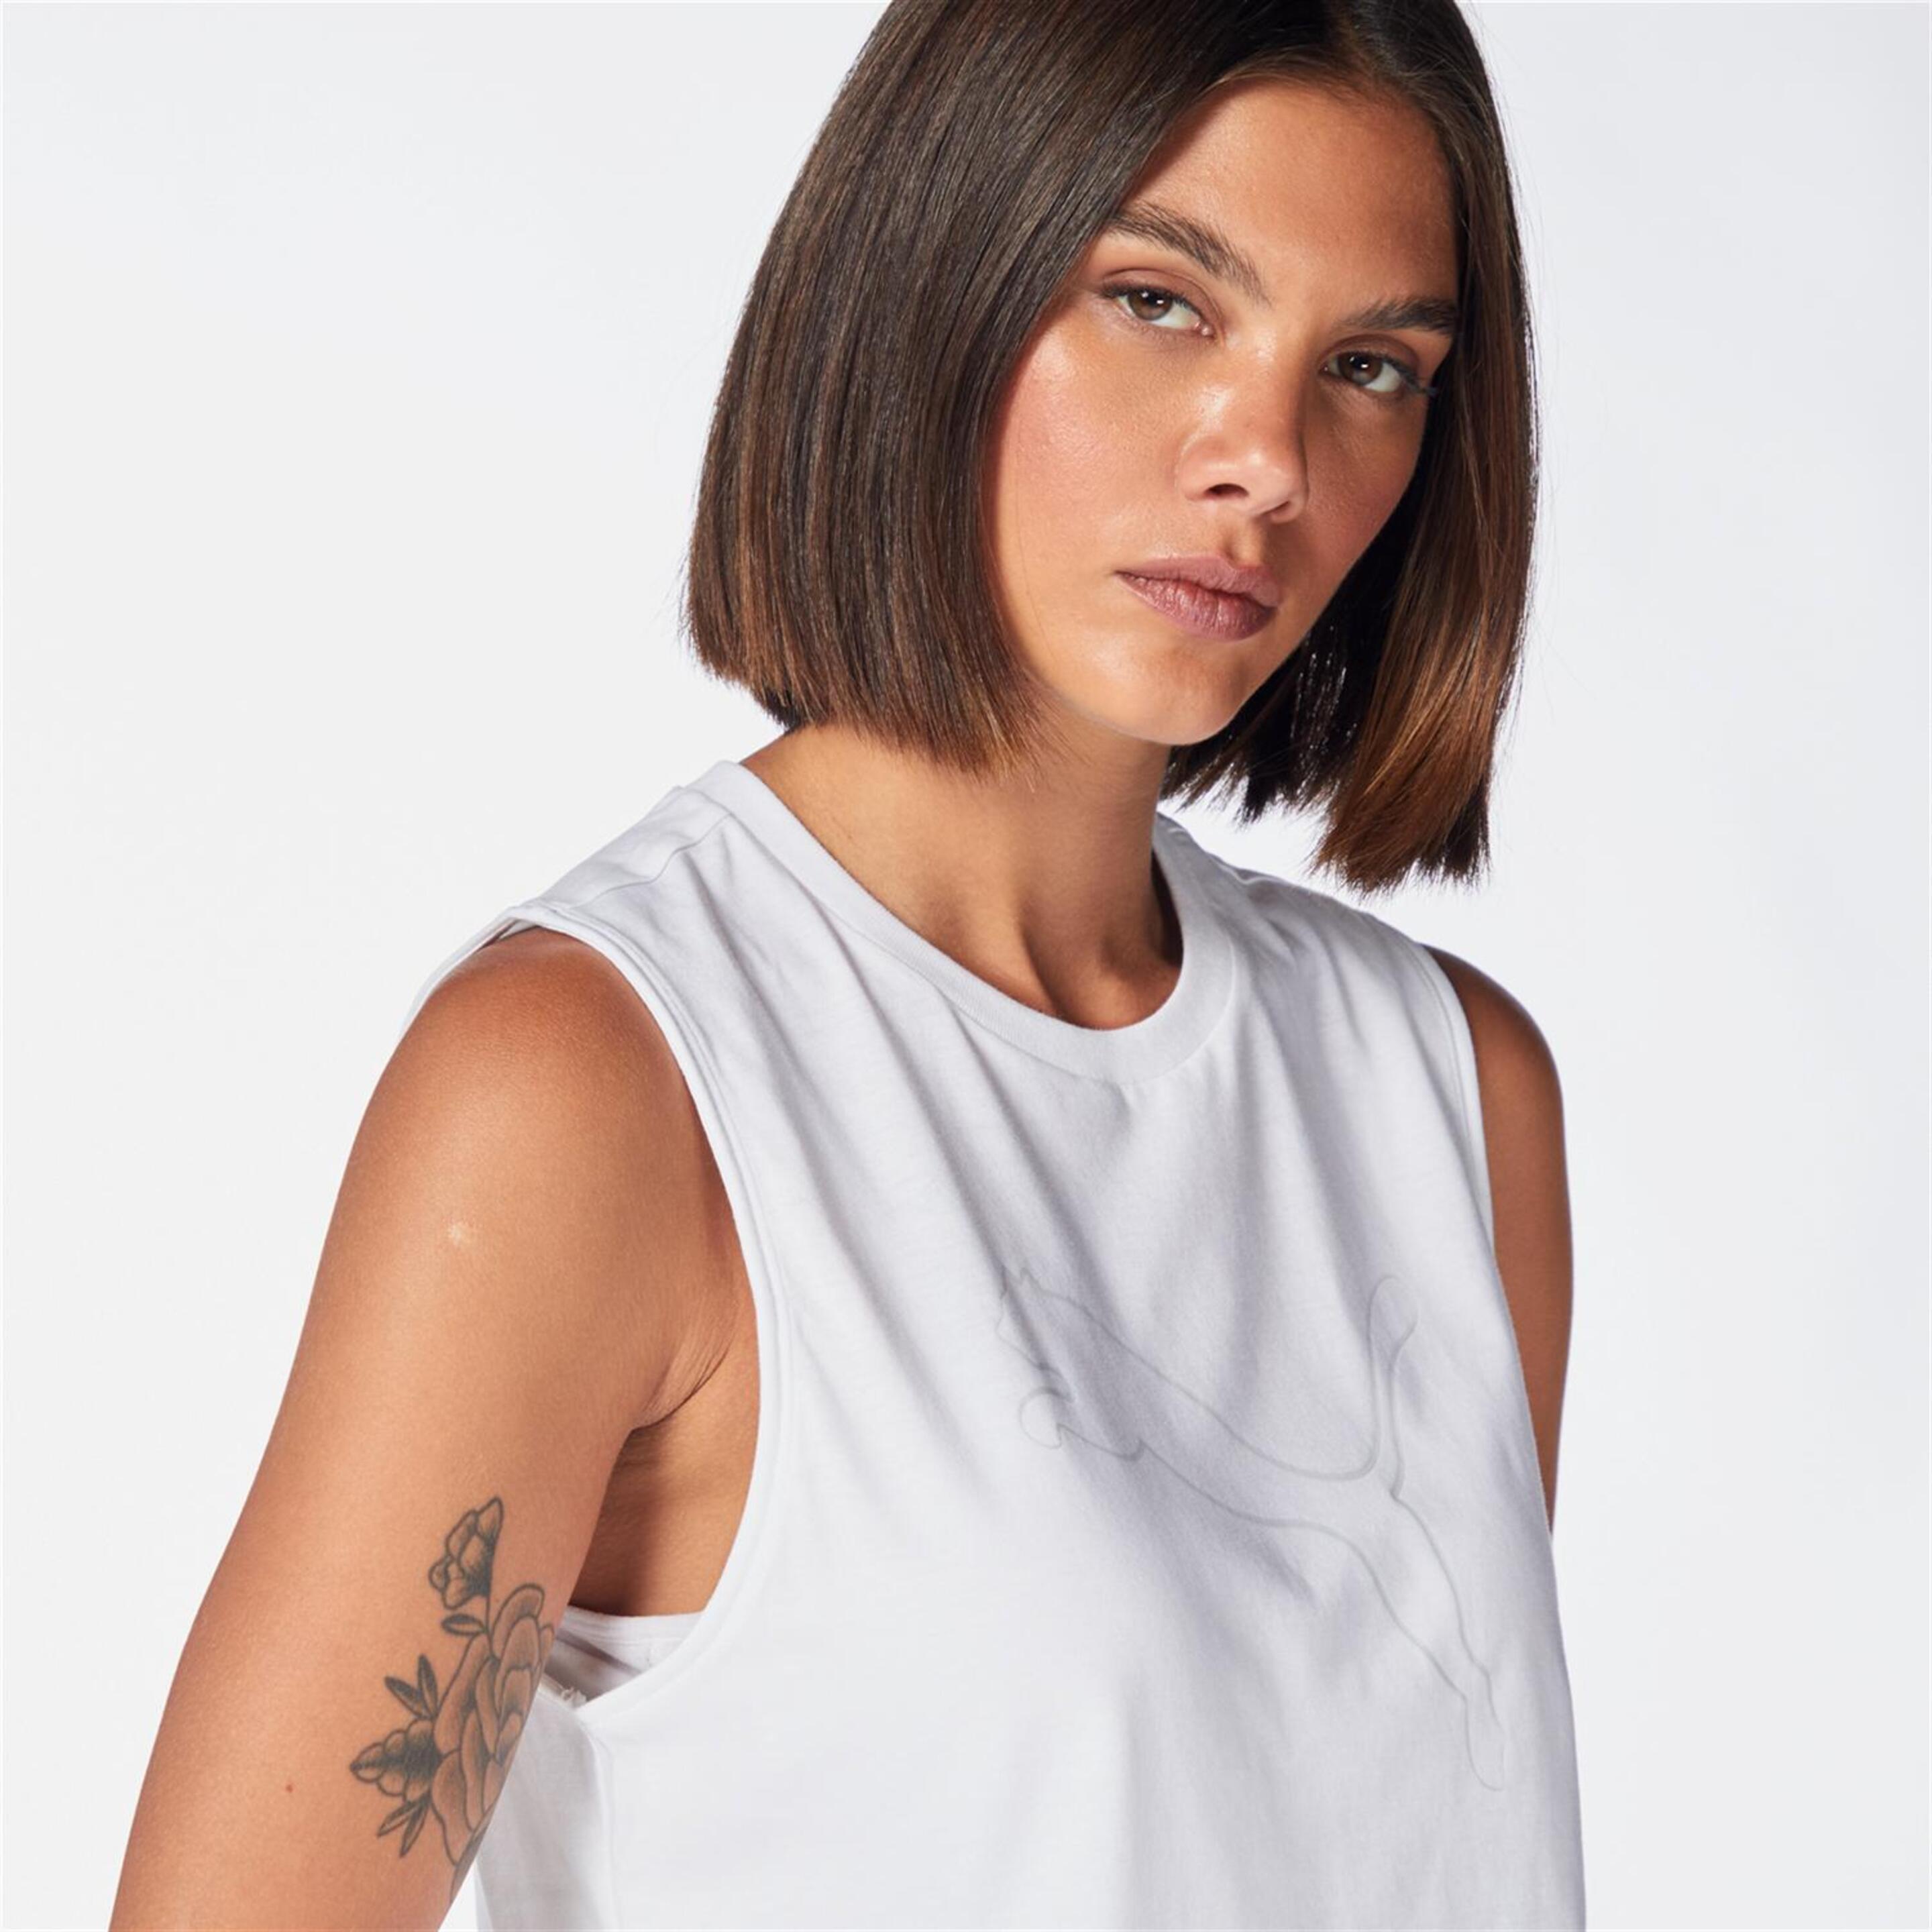 Puma Motion - Blanco - Camiseta Mujer